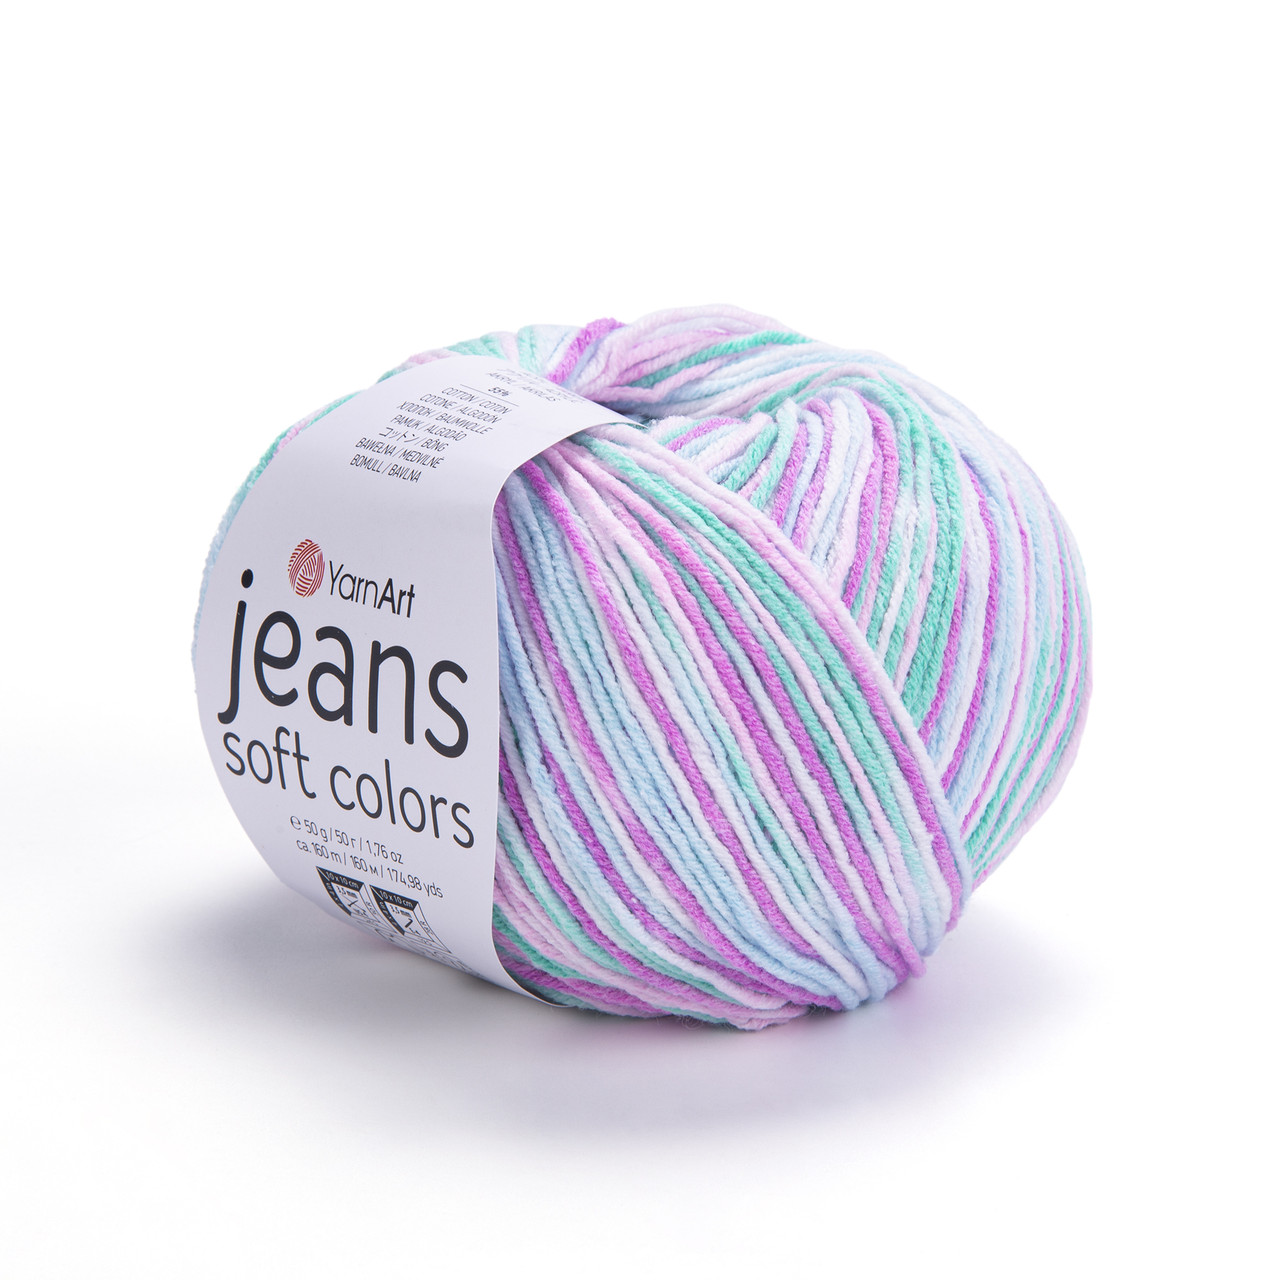 Пряжа Ярнарт Джинс Софт Колорс (Yarnart Jeans Soft Colors) цвет 6202 сирень/голубой